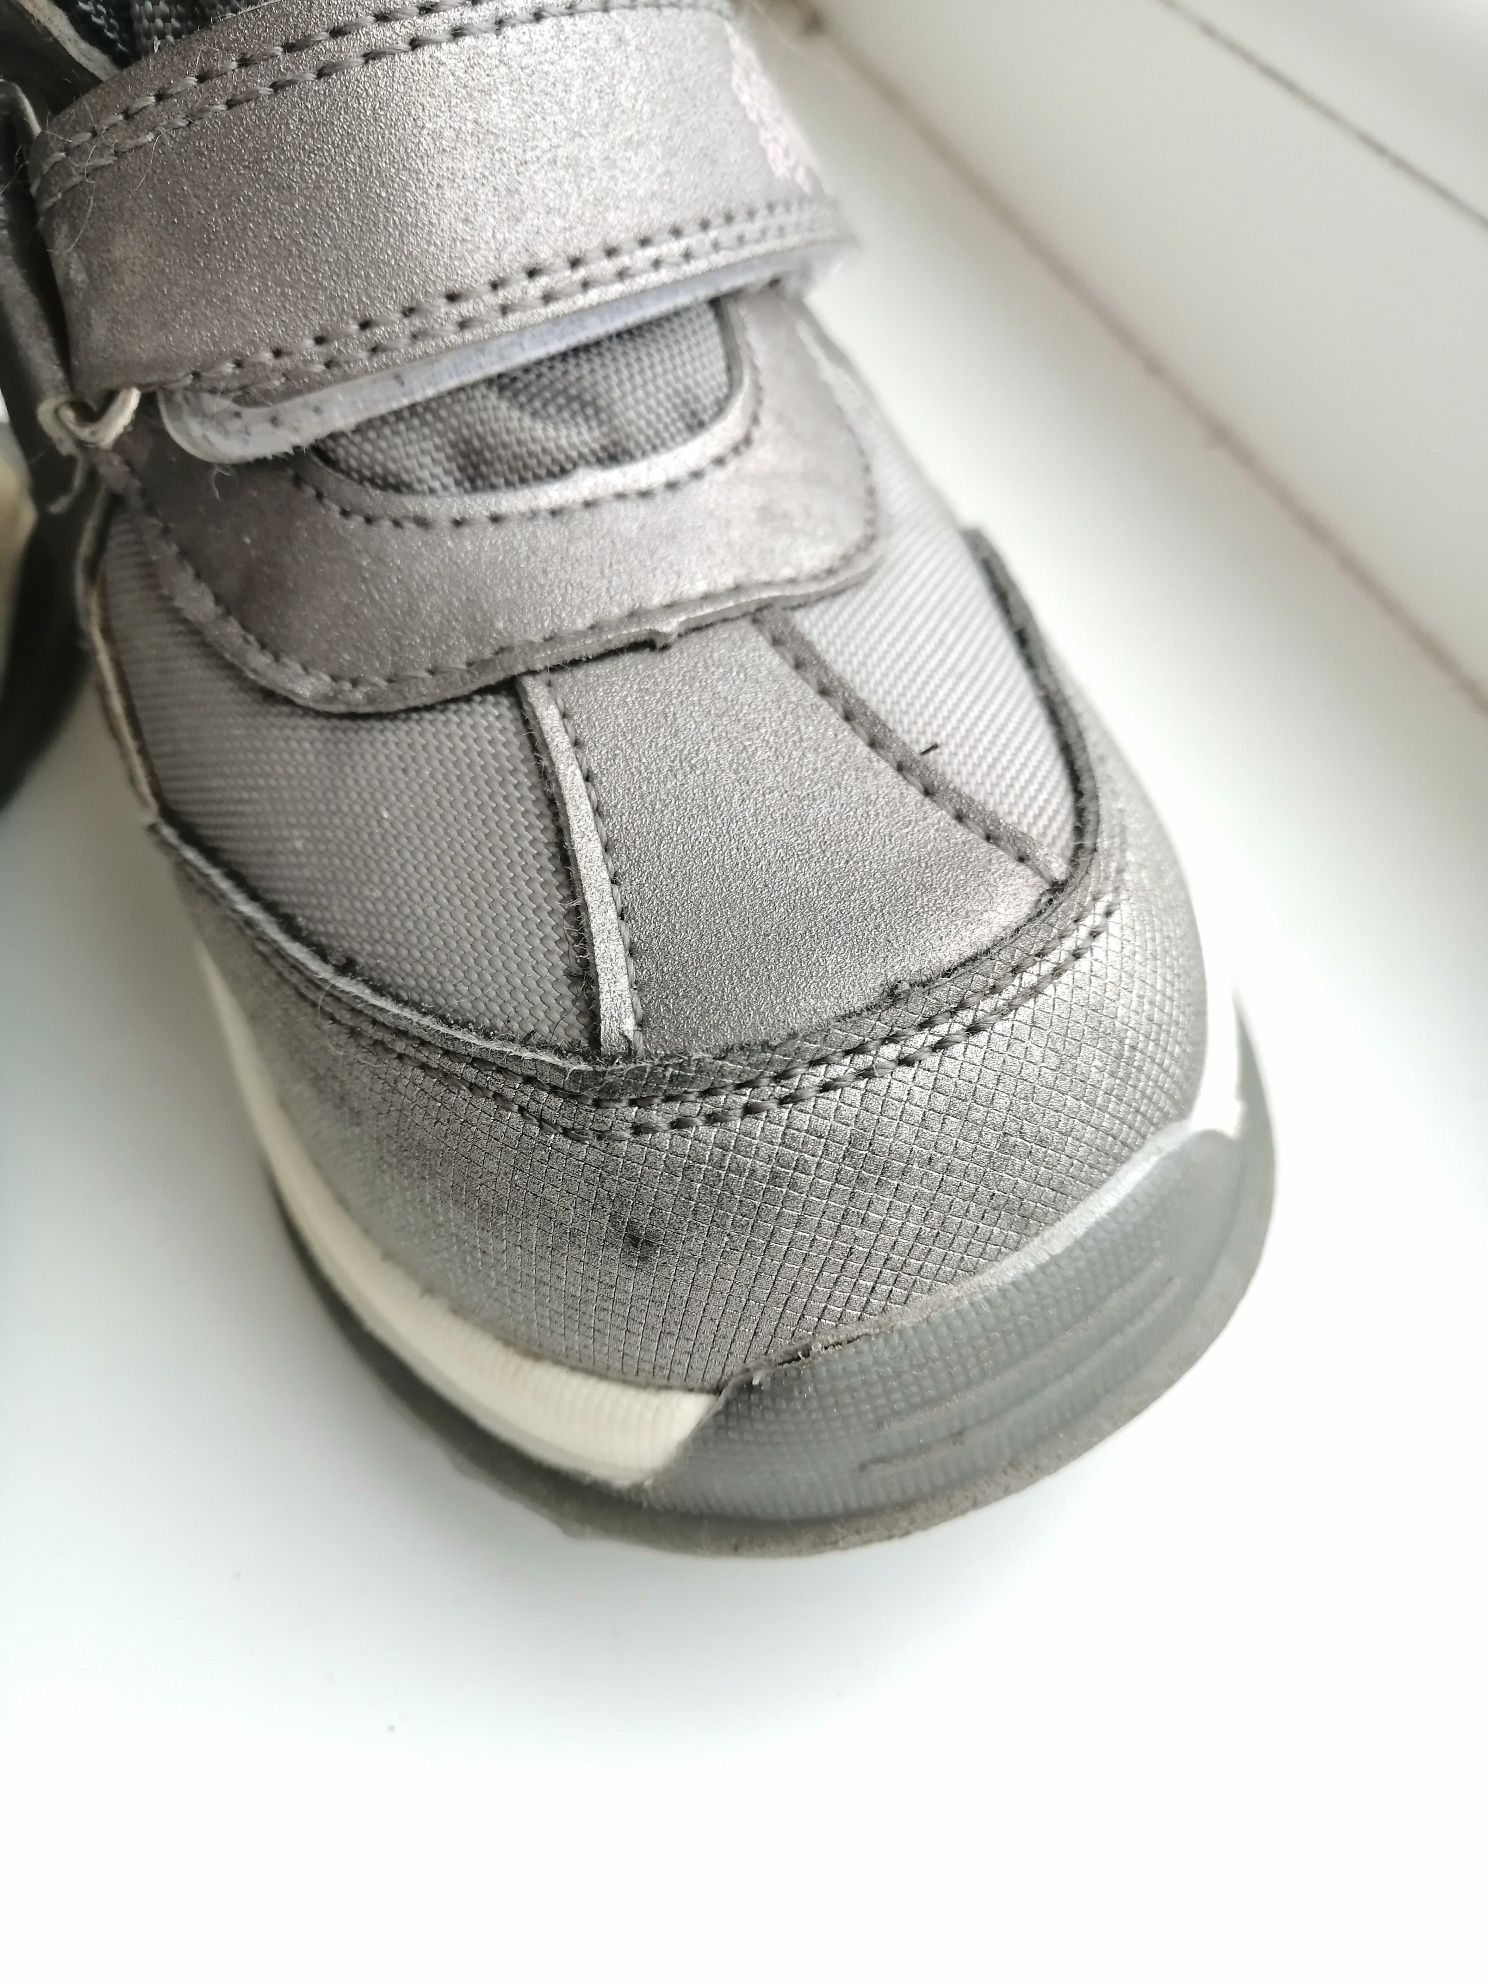 Зимние сапоги сапожки ботинки сноубутсы Tom.m 26 размер